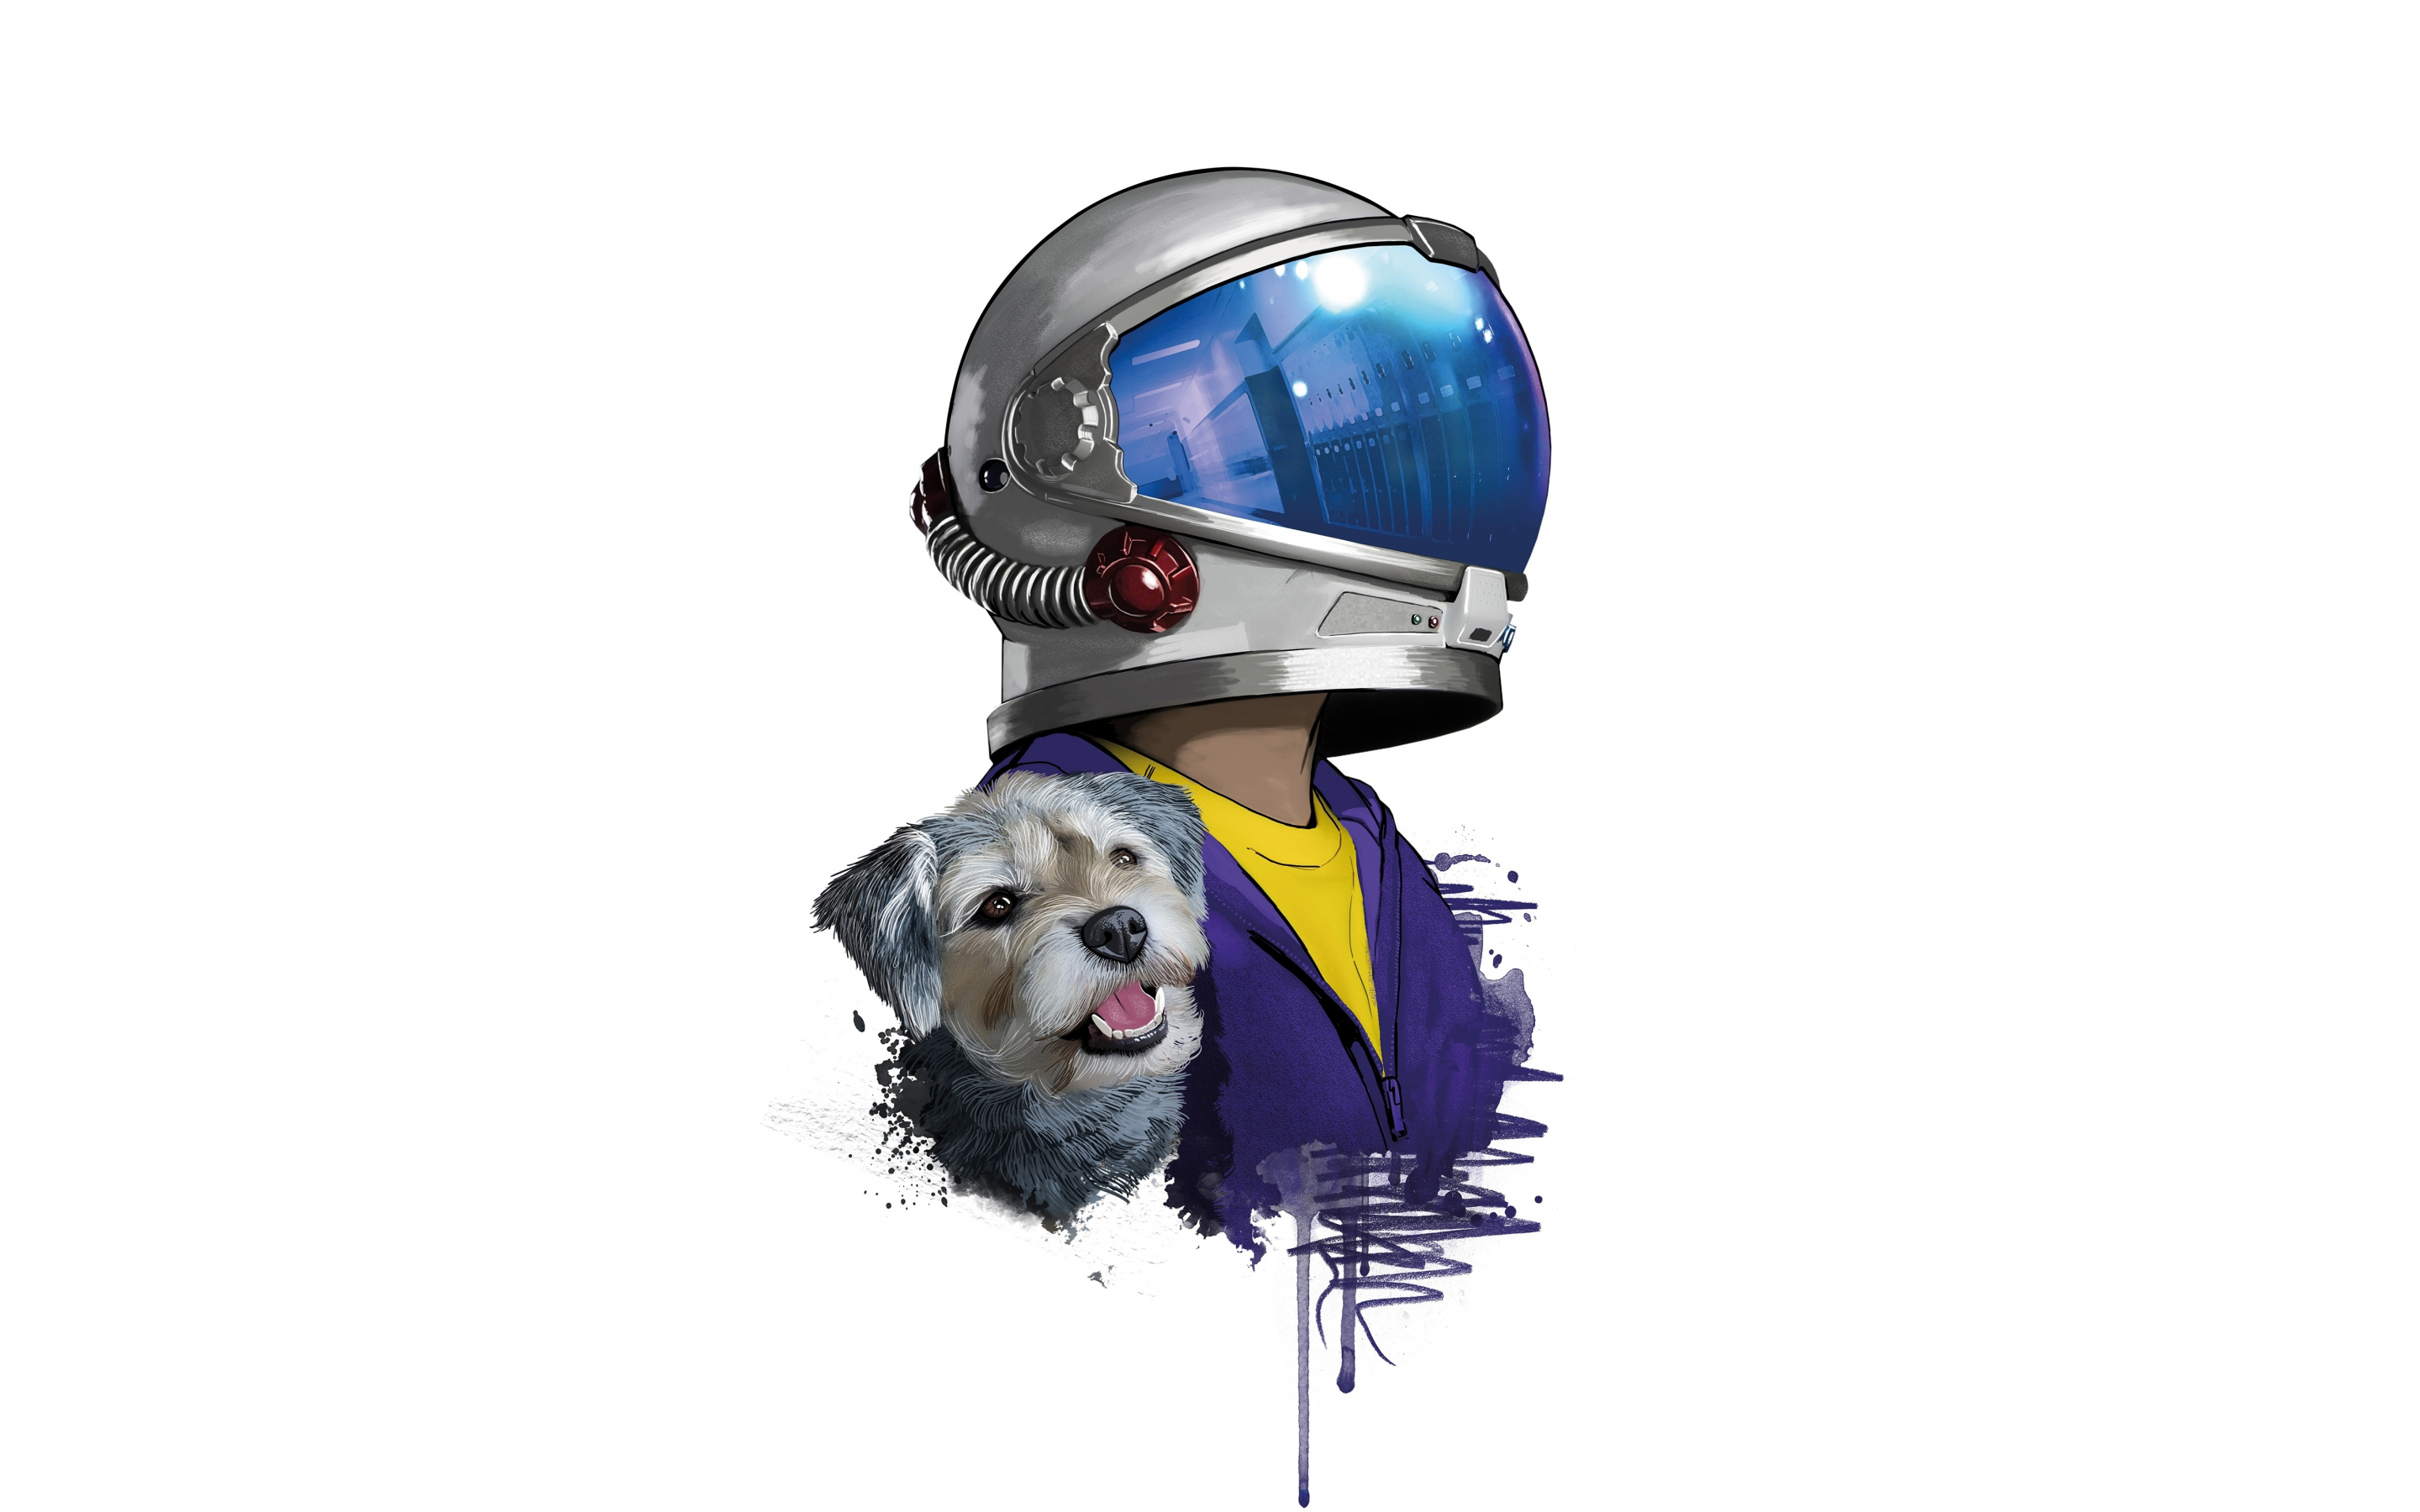 Helmet guy and dog, art, 2880x1800 wallpaper